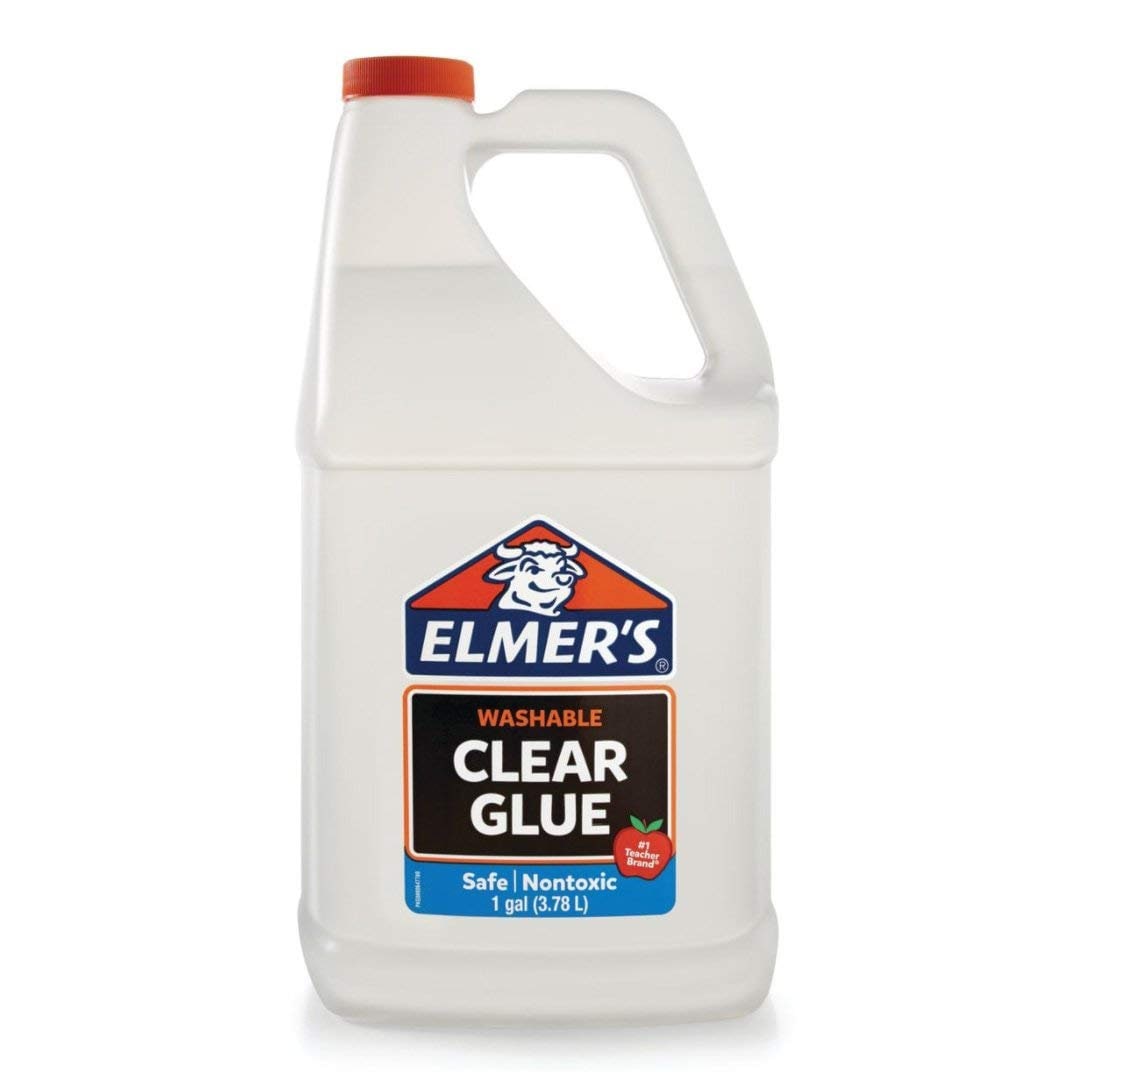 Aleene&s Original Tacky Glue 1 Gallon